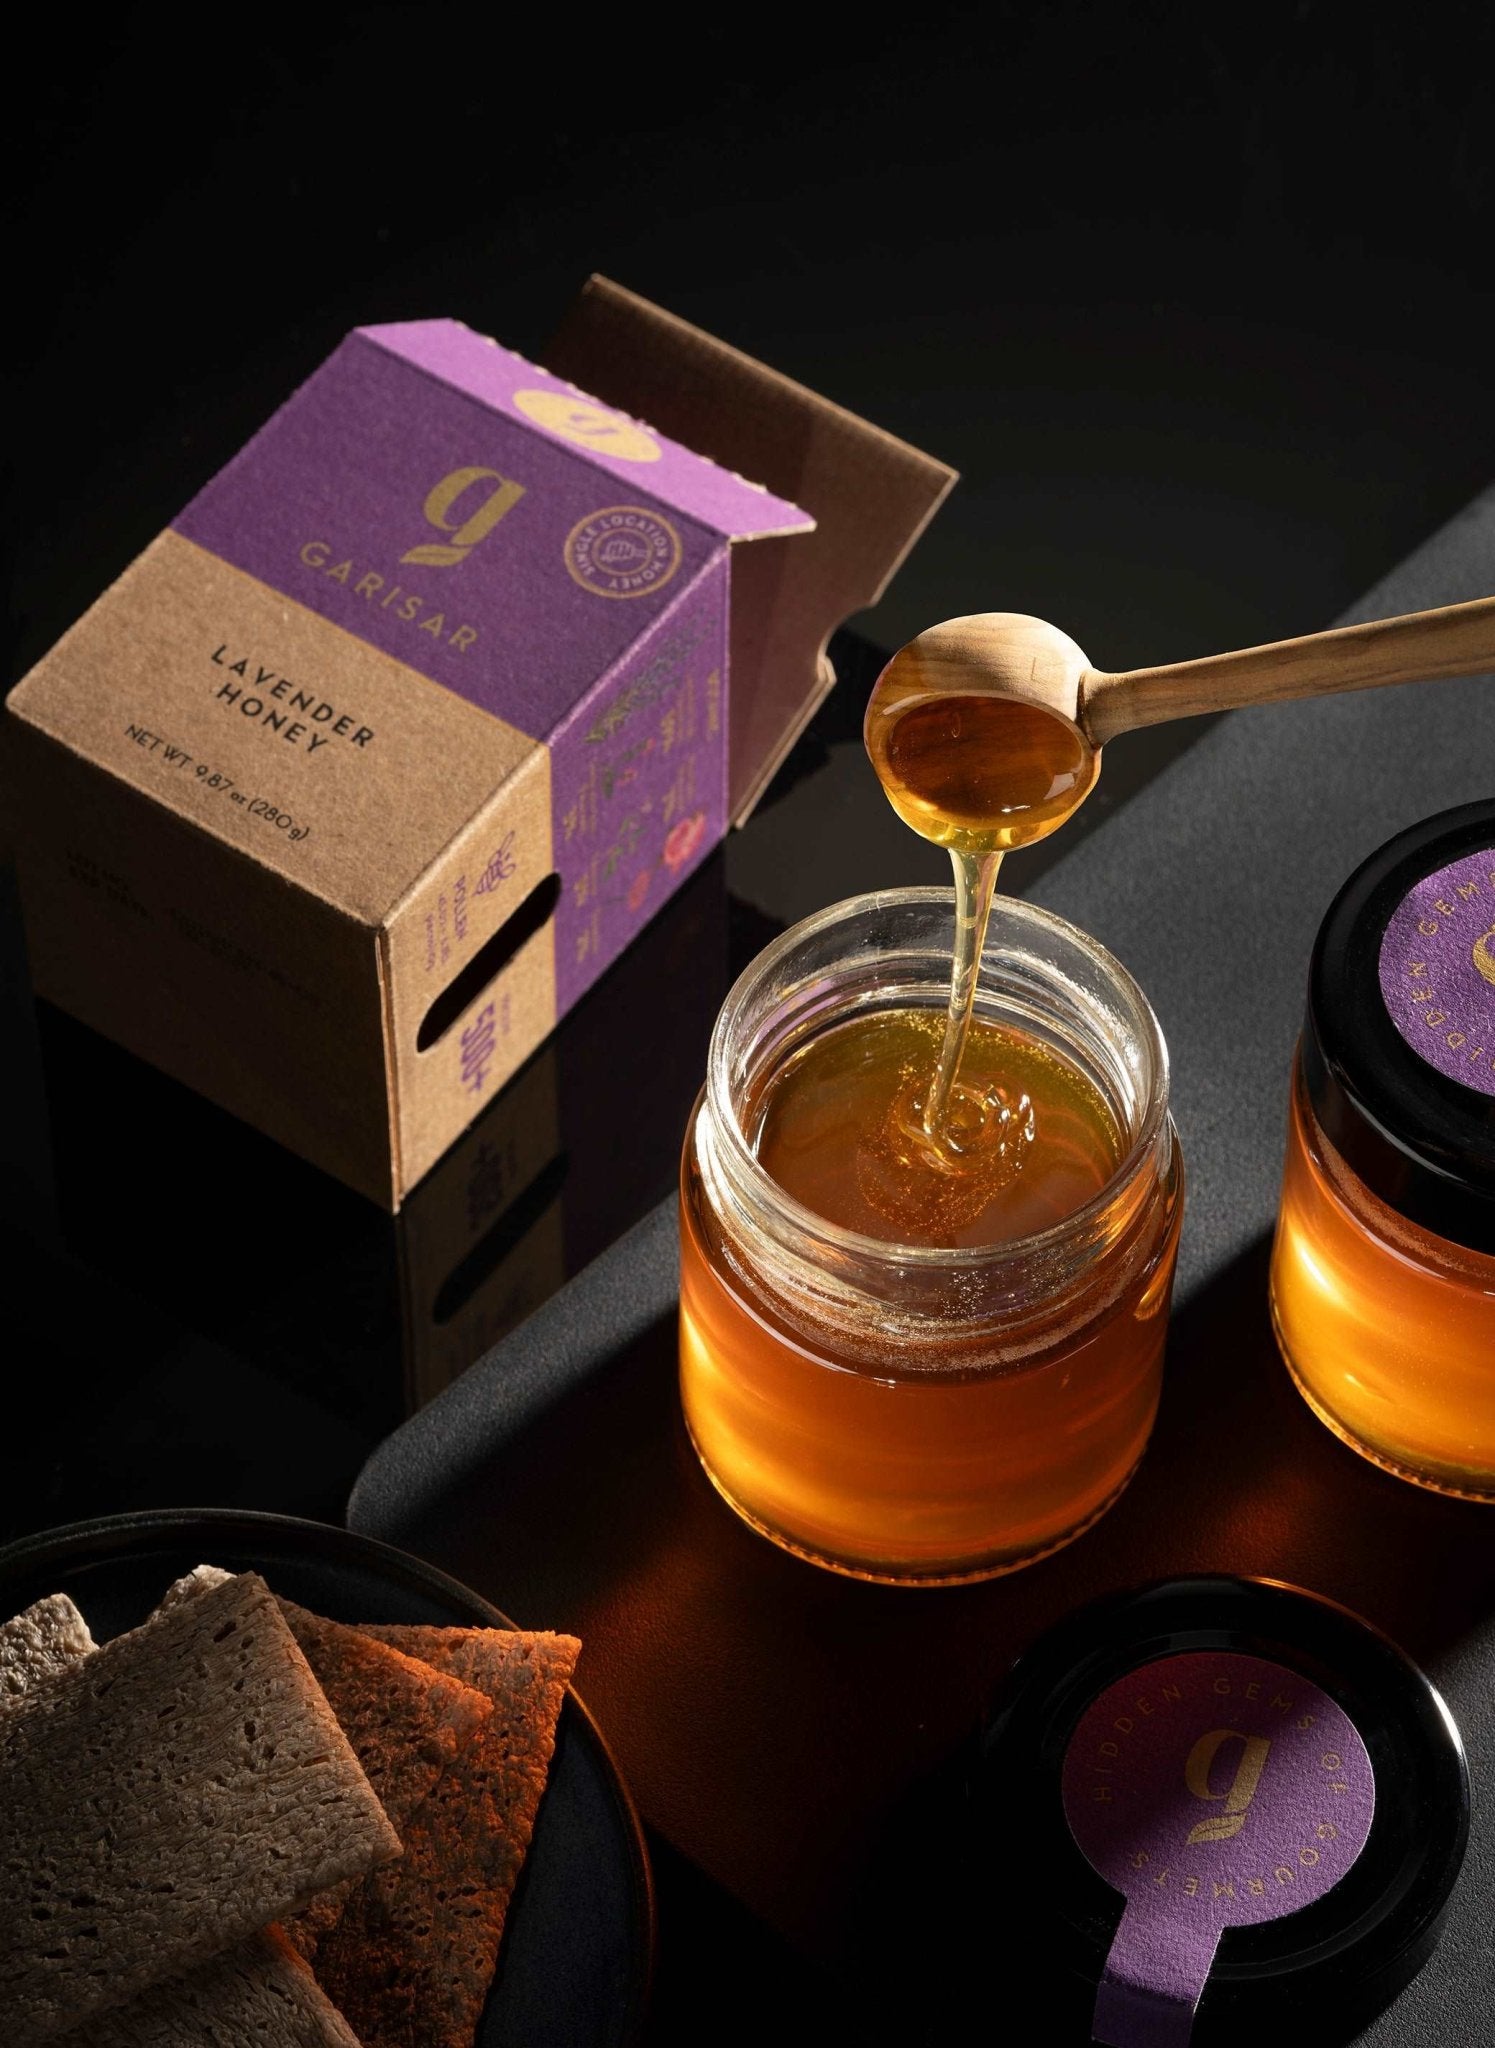 Garisar Lavender Honey - Garisar